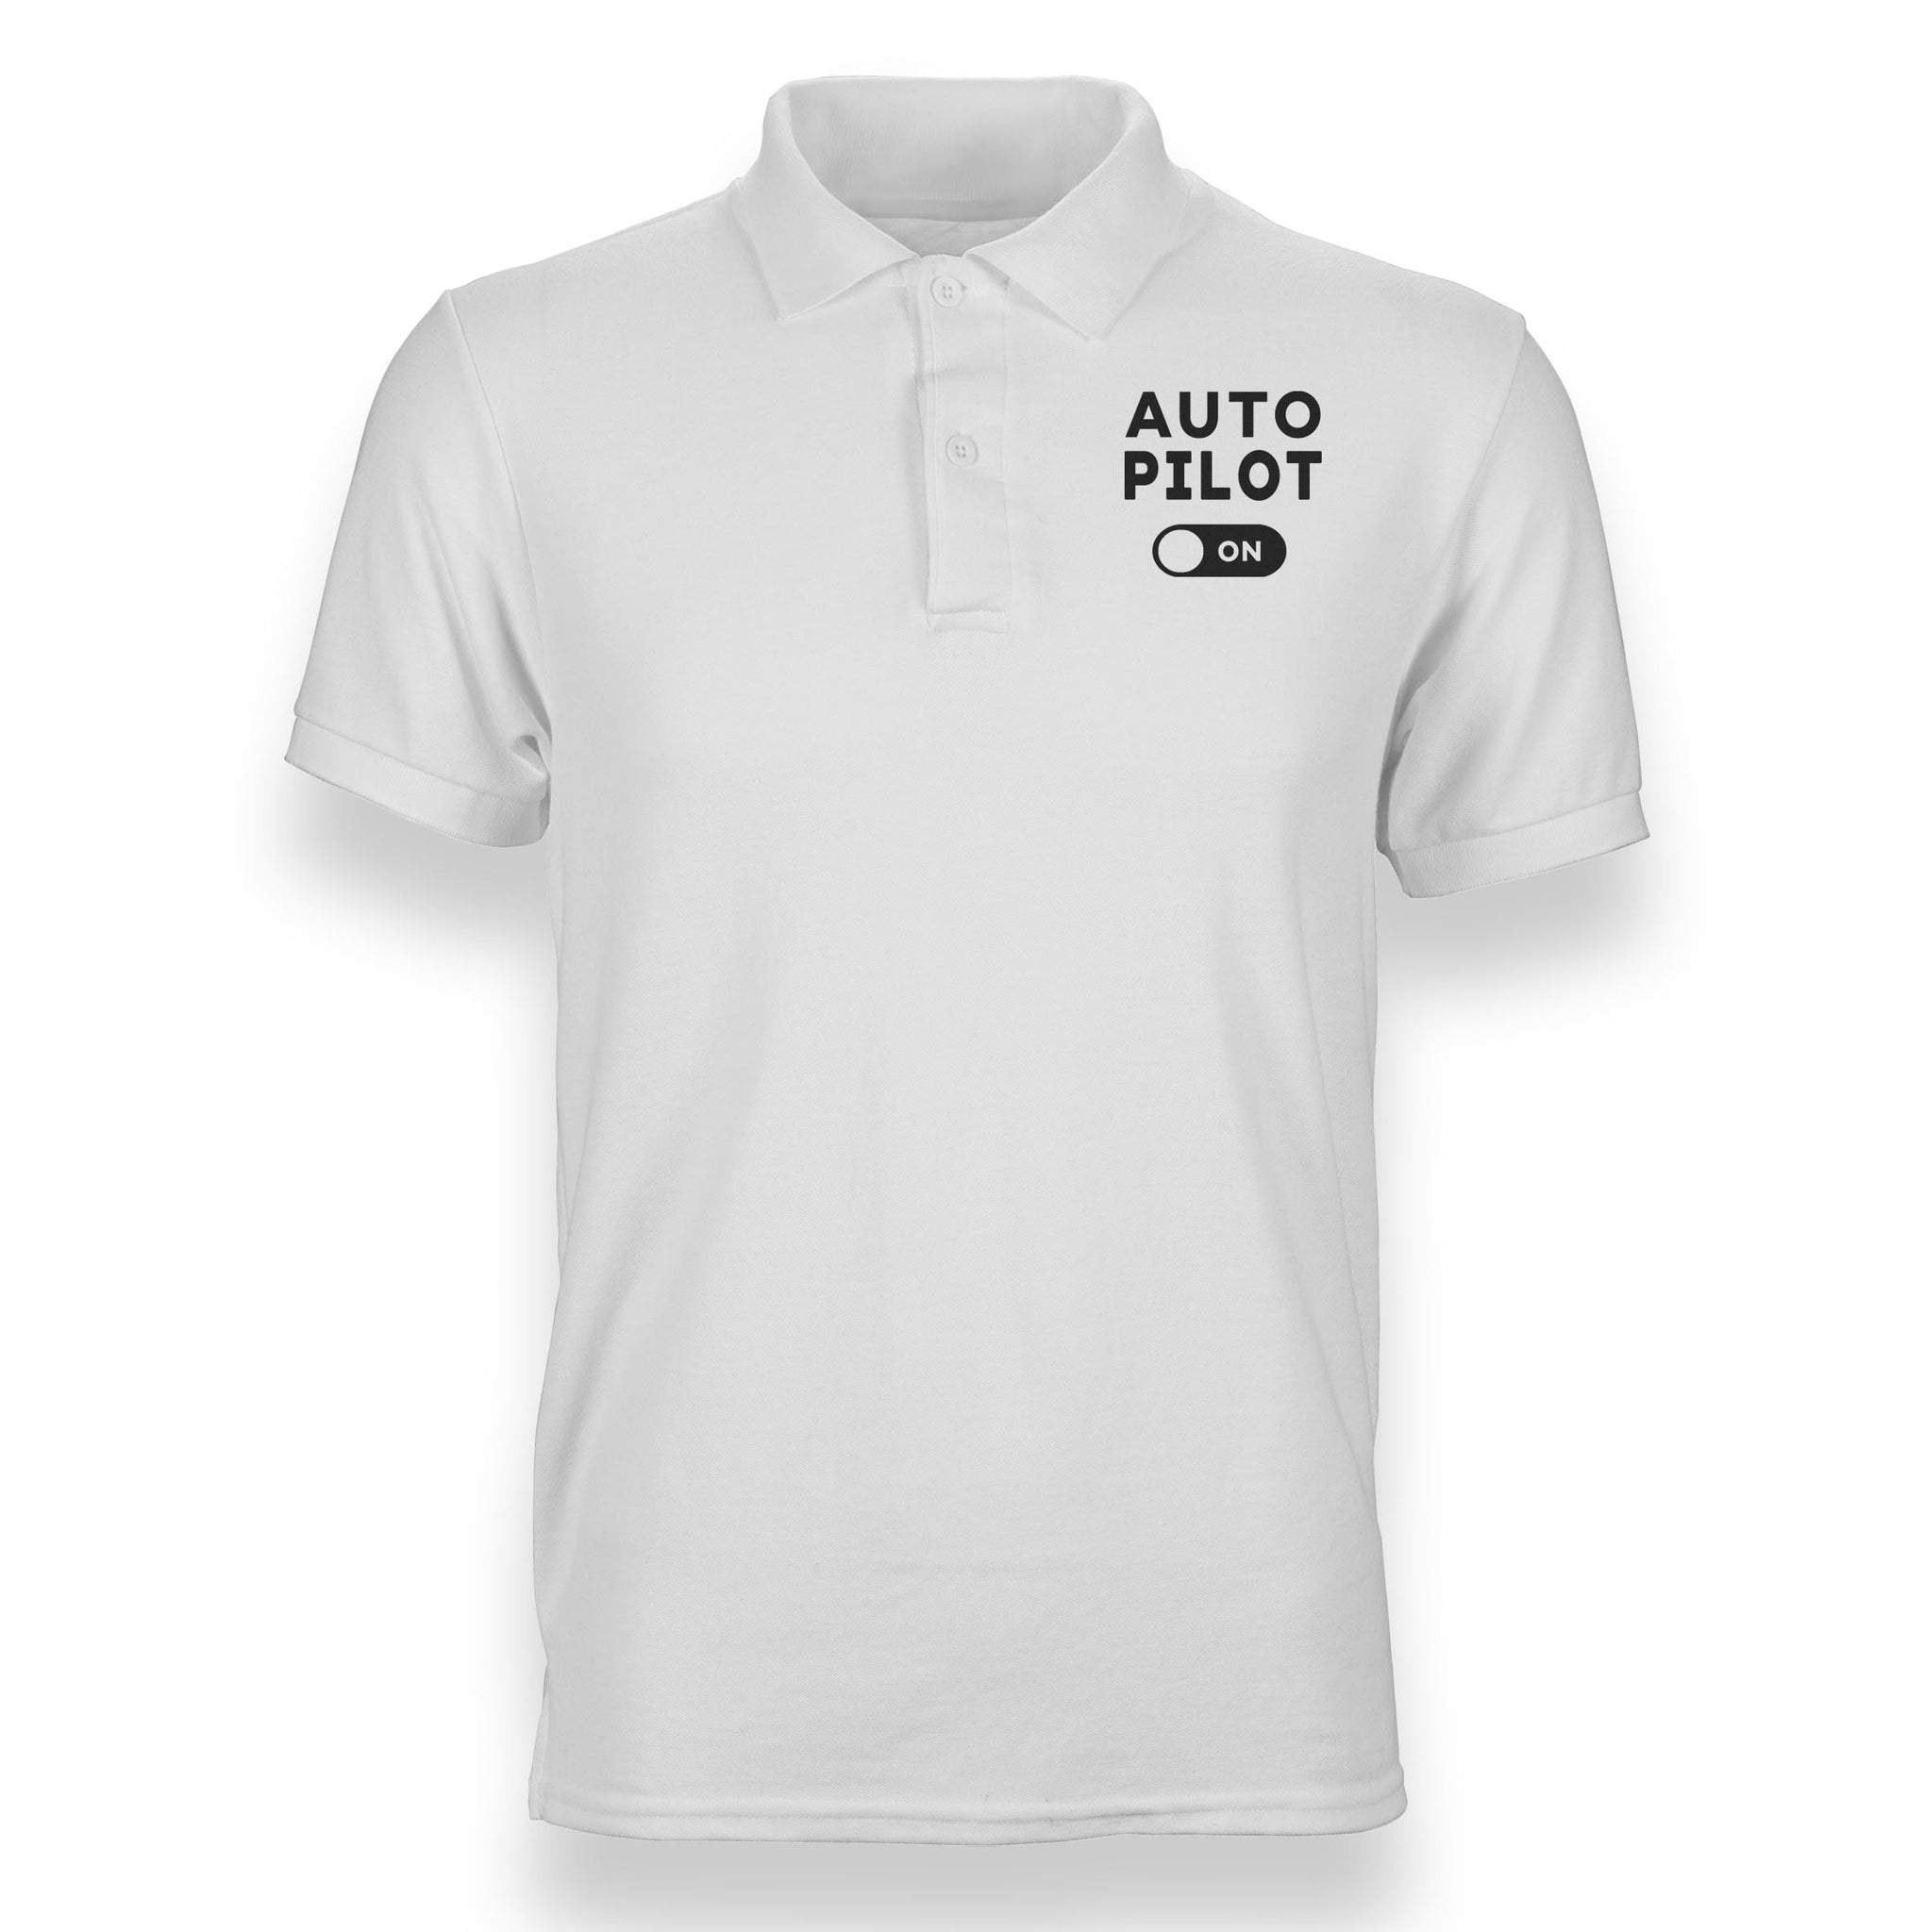 Auto Pilot On Designed Polo T-Shirts